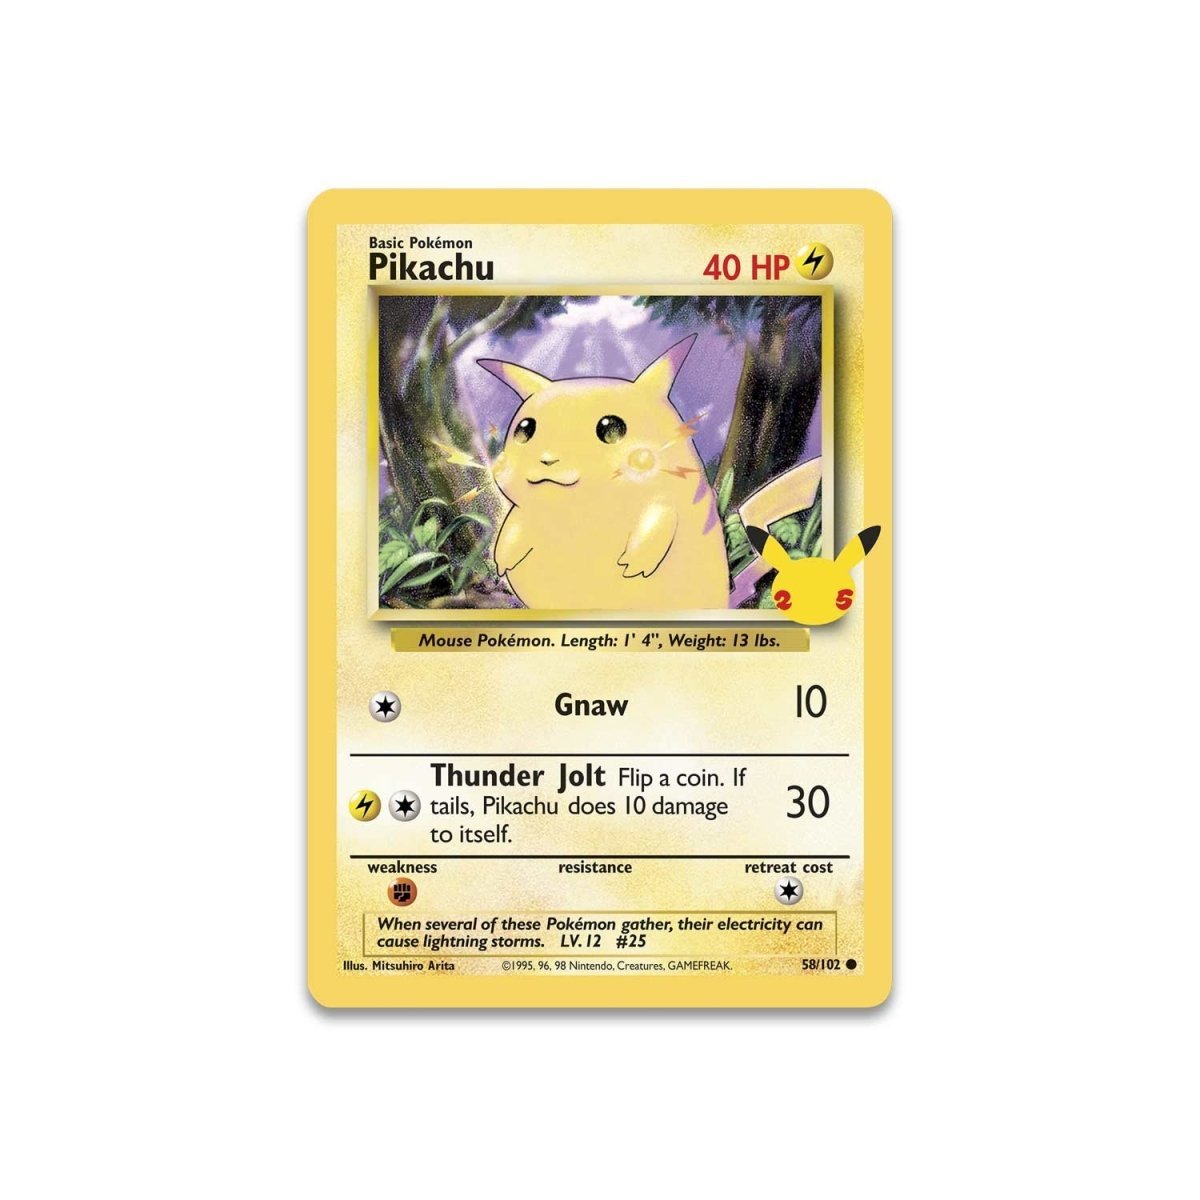 Pokémon TCG: First Partner Collector's Binder - PokeRvm